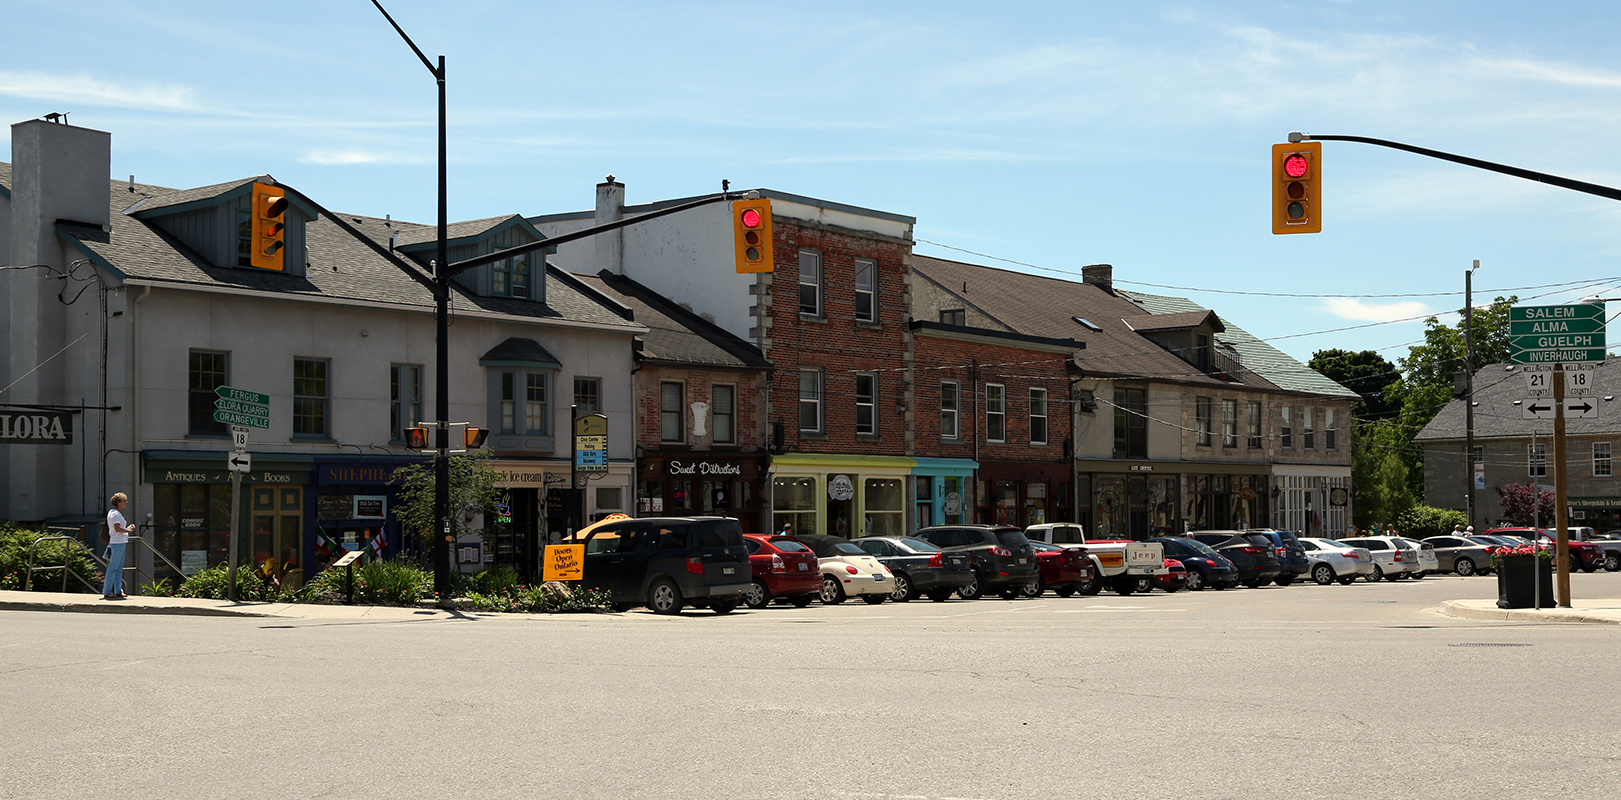 Commercial Insurance in Elora, Fergus, Shelburne, and Guelph